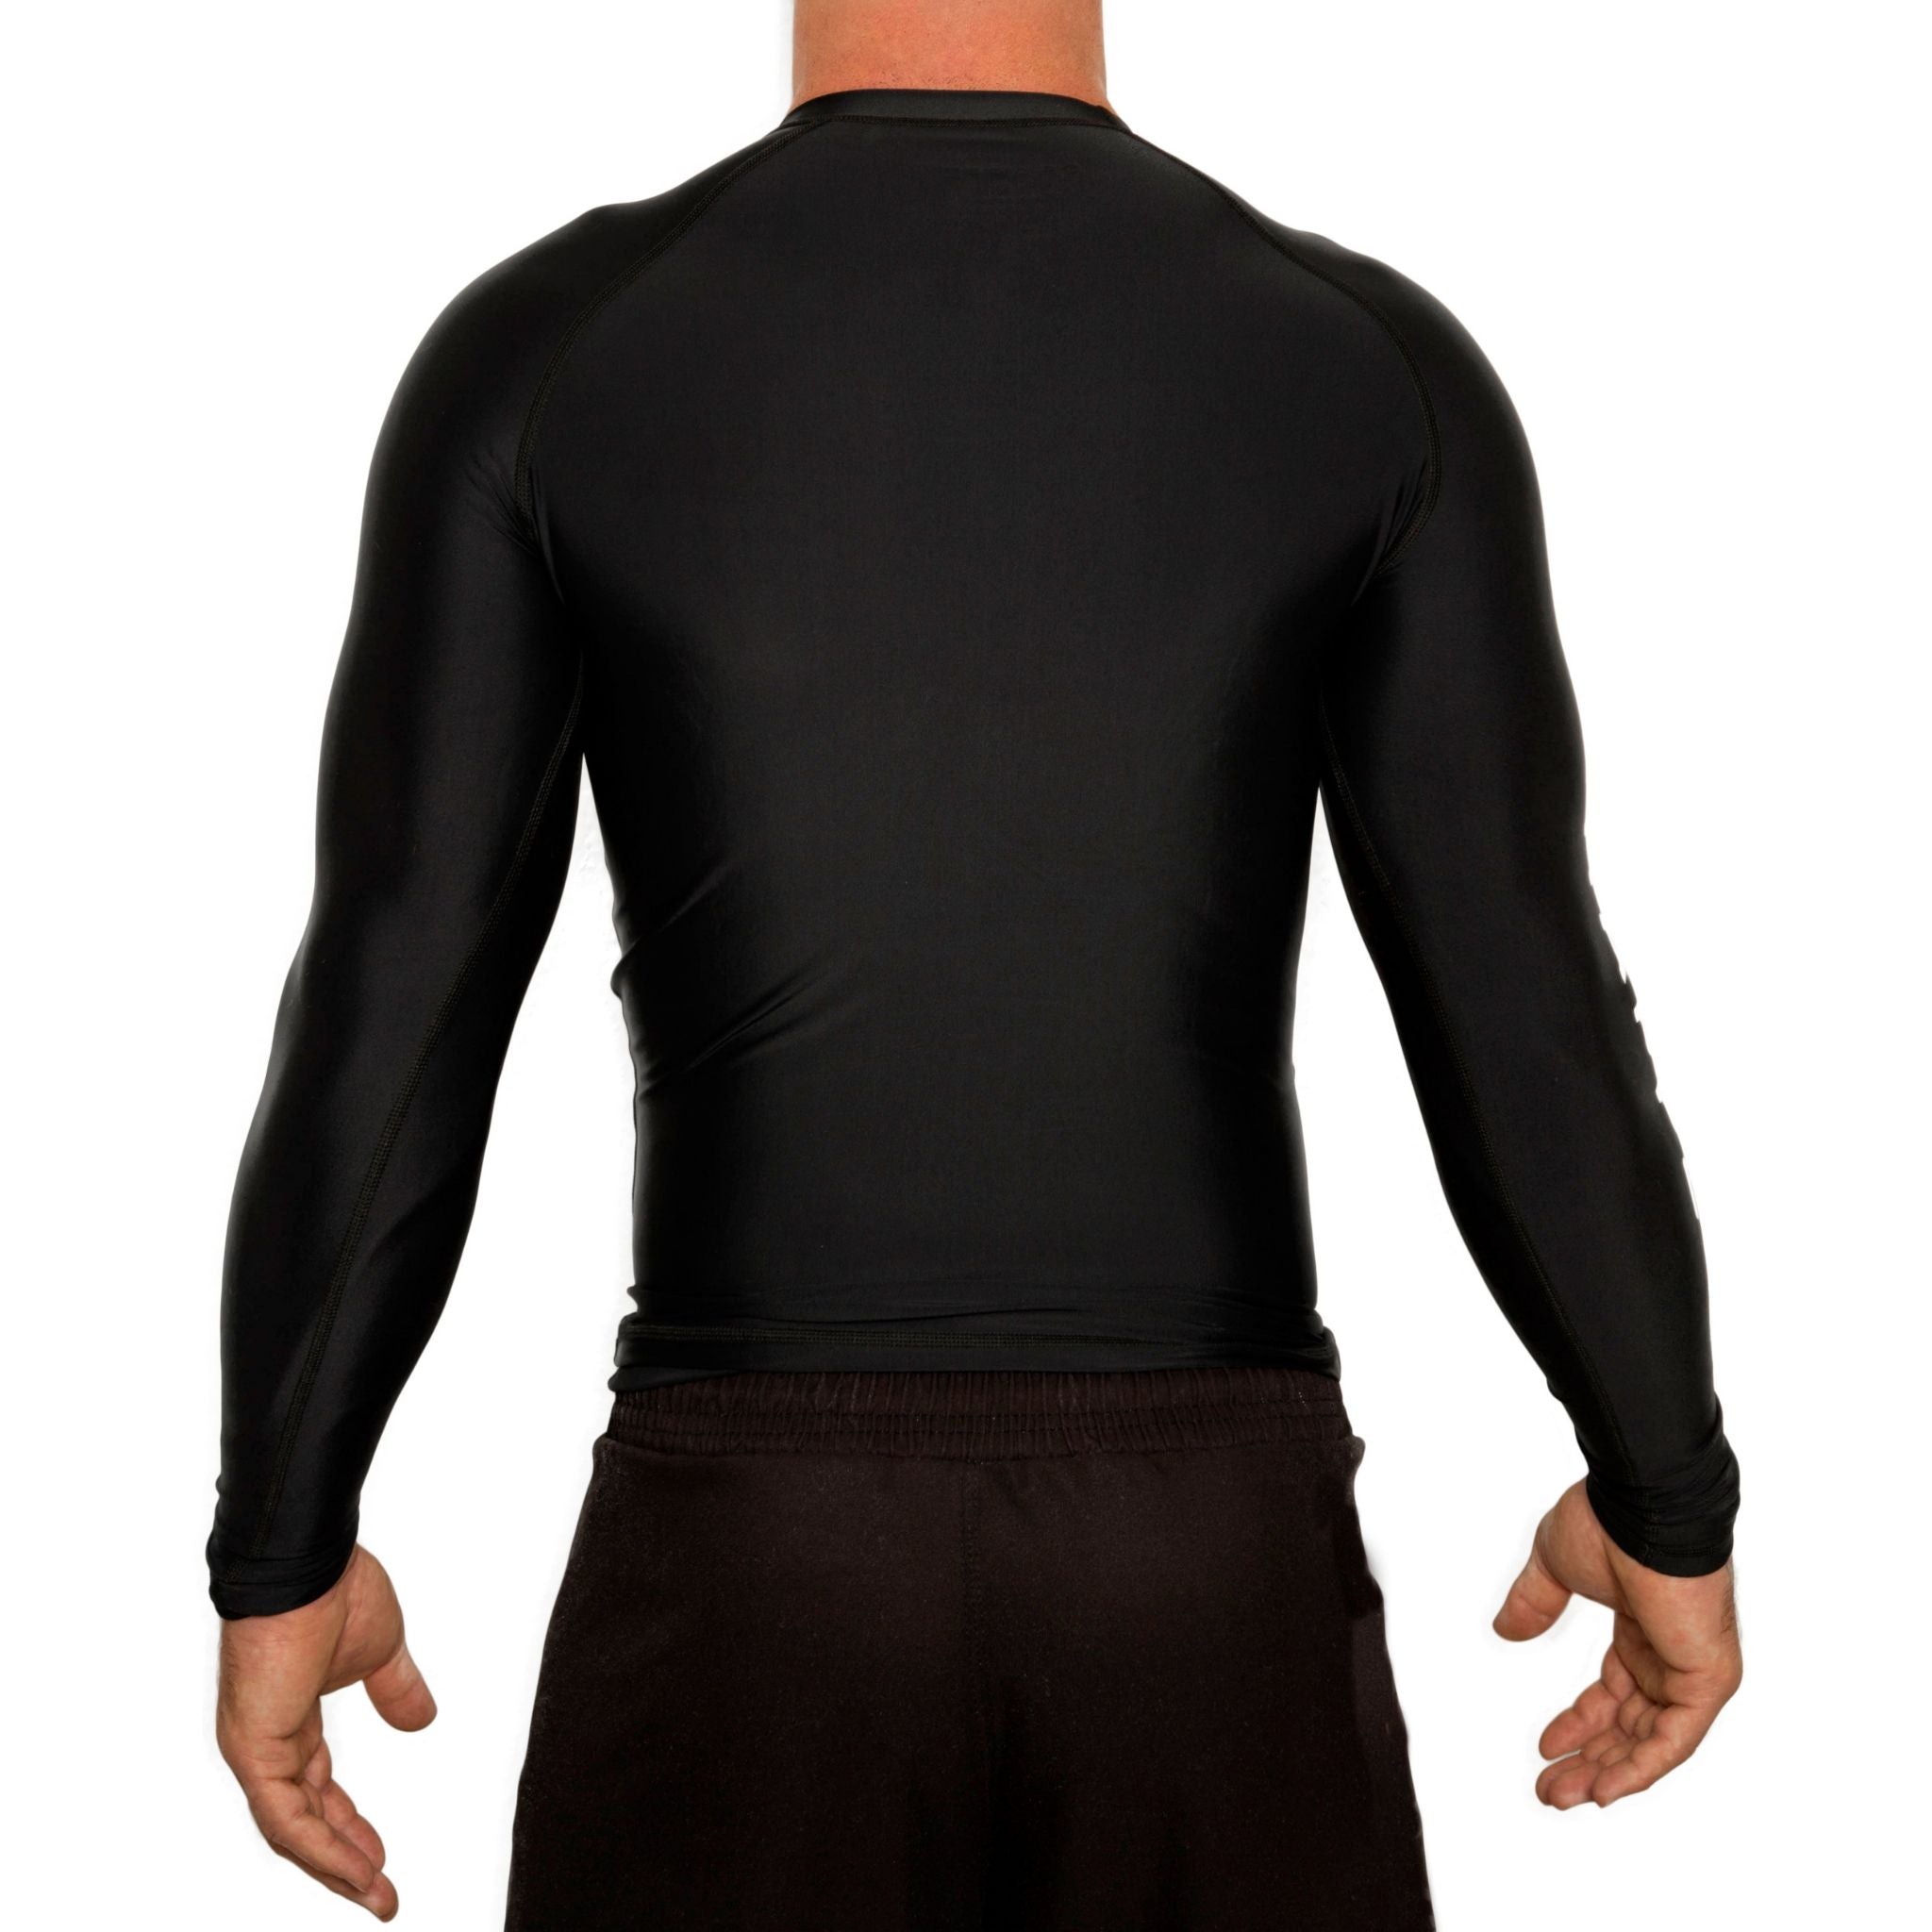 Rashguard - Long Sleeve Athletic Compression Shirt - Base layer